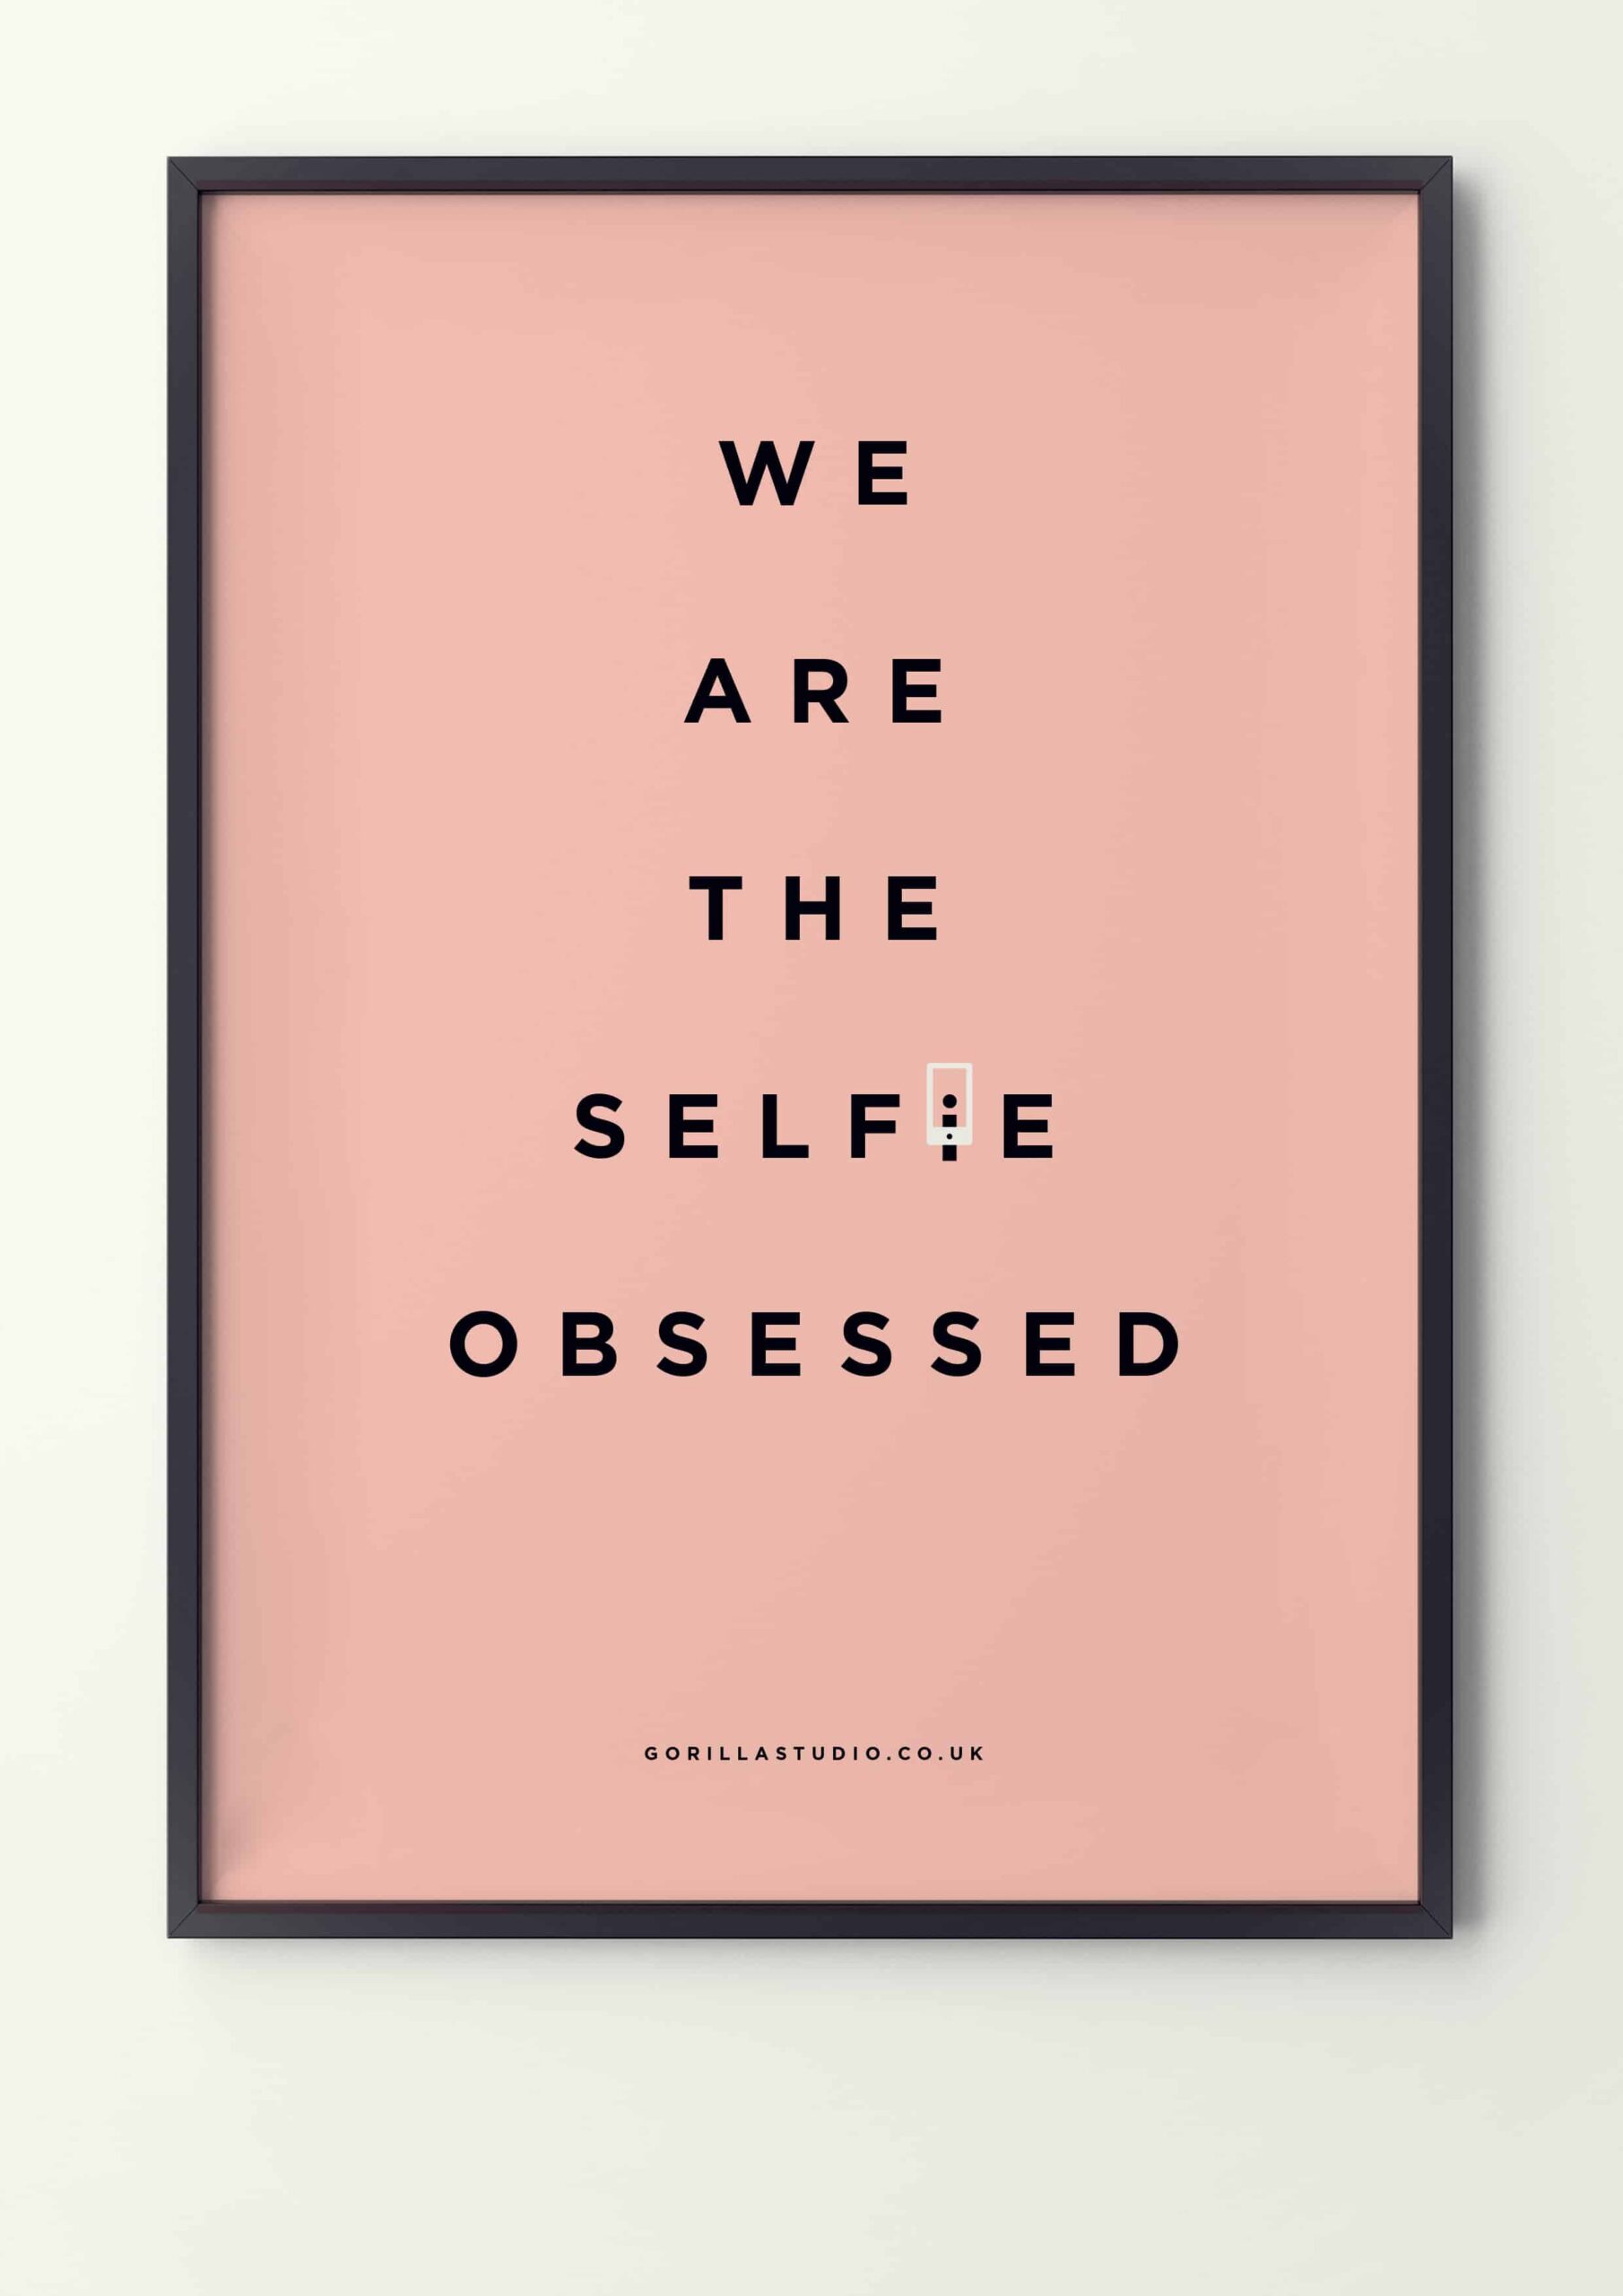 The Selfie Obsessed?